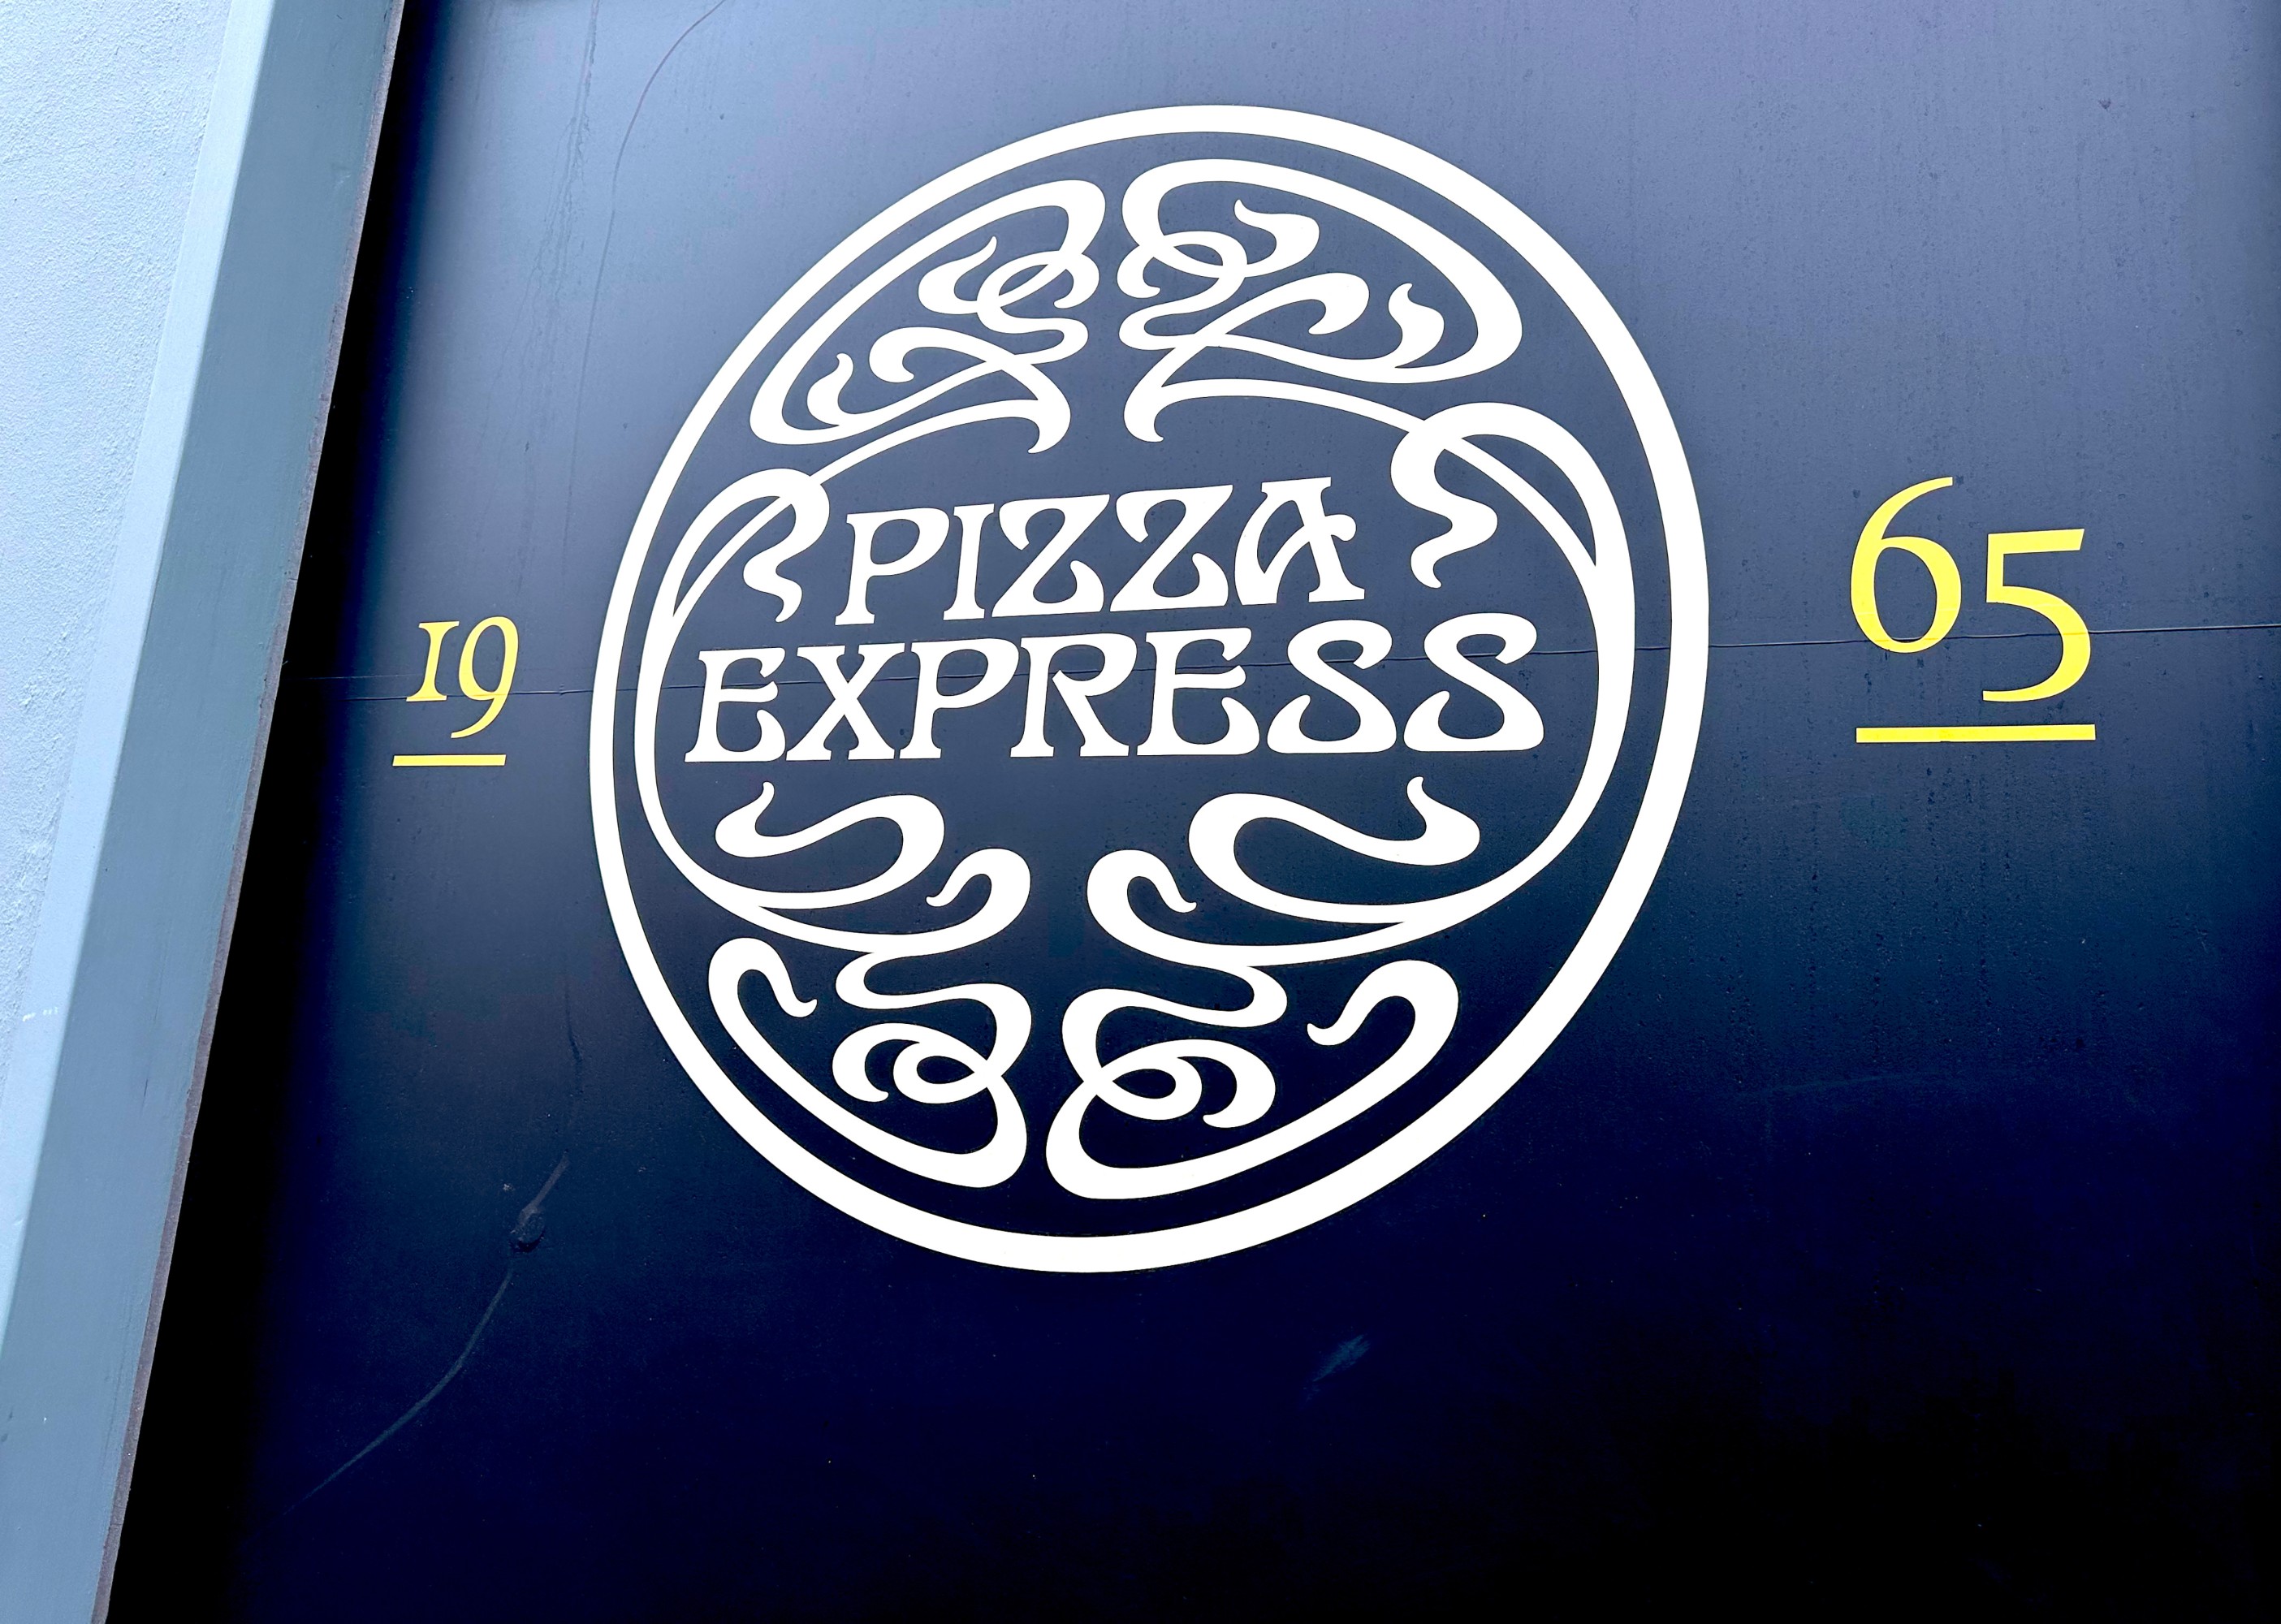 pizza express offers free dough balls